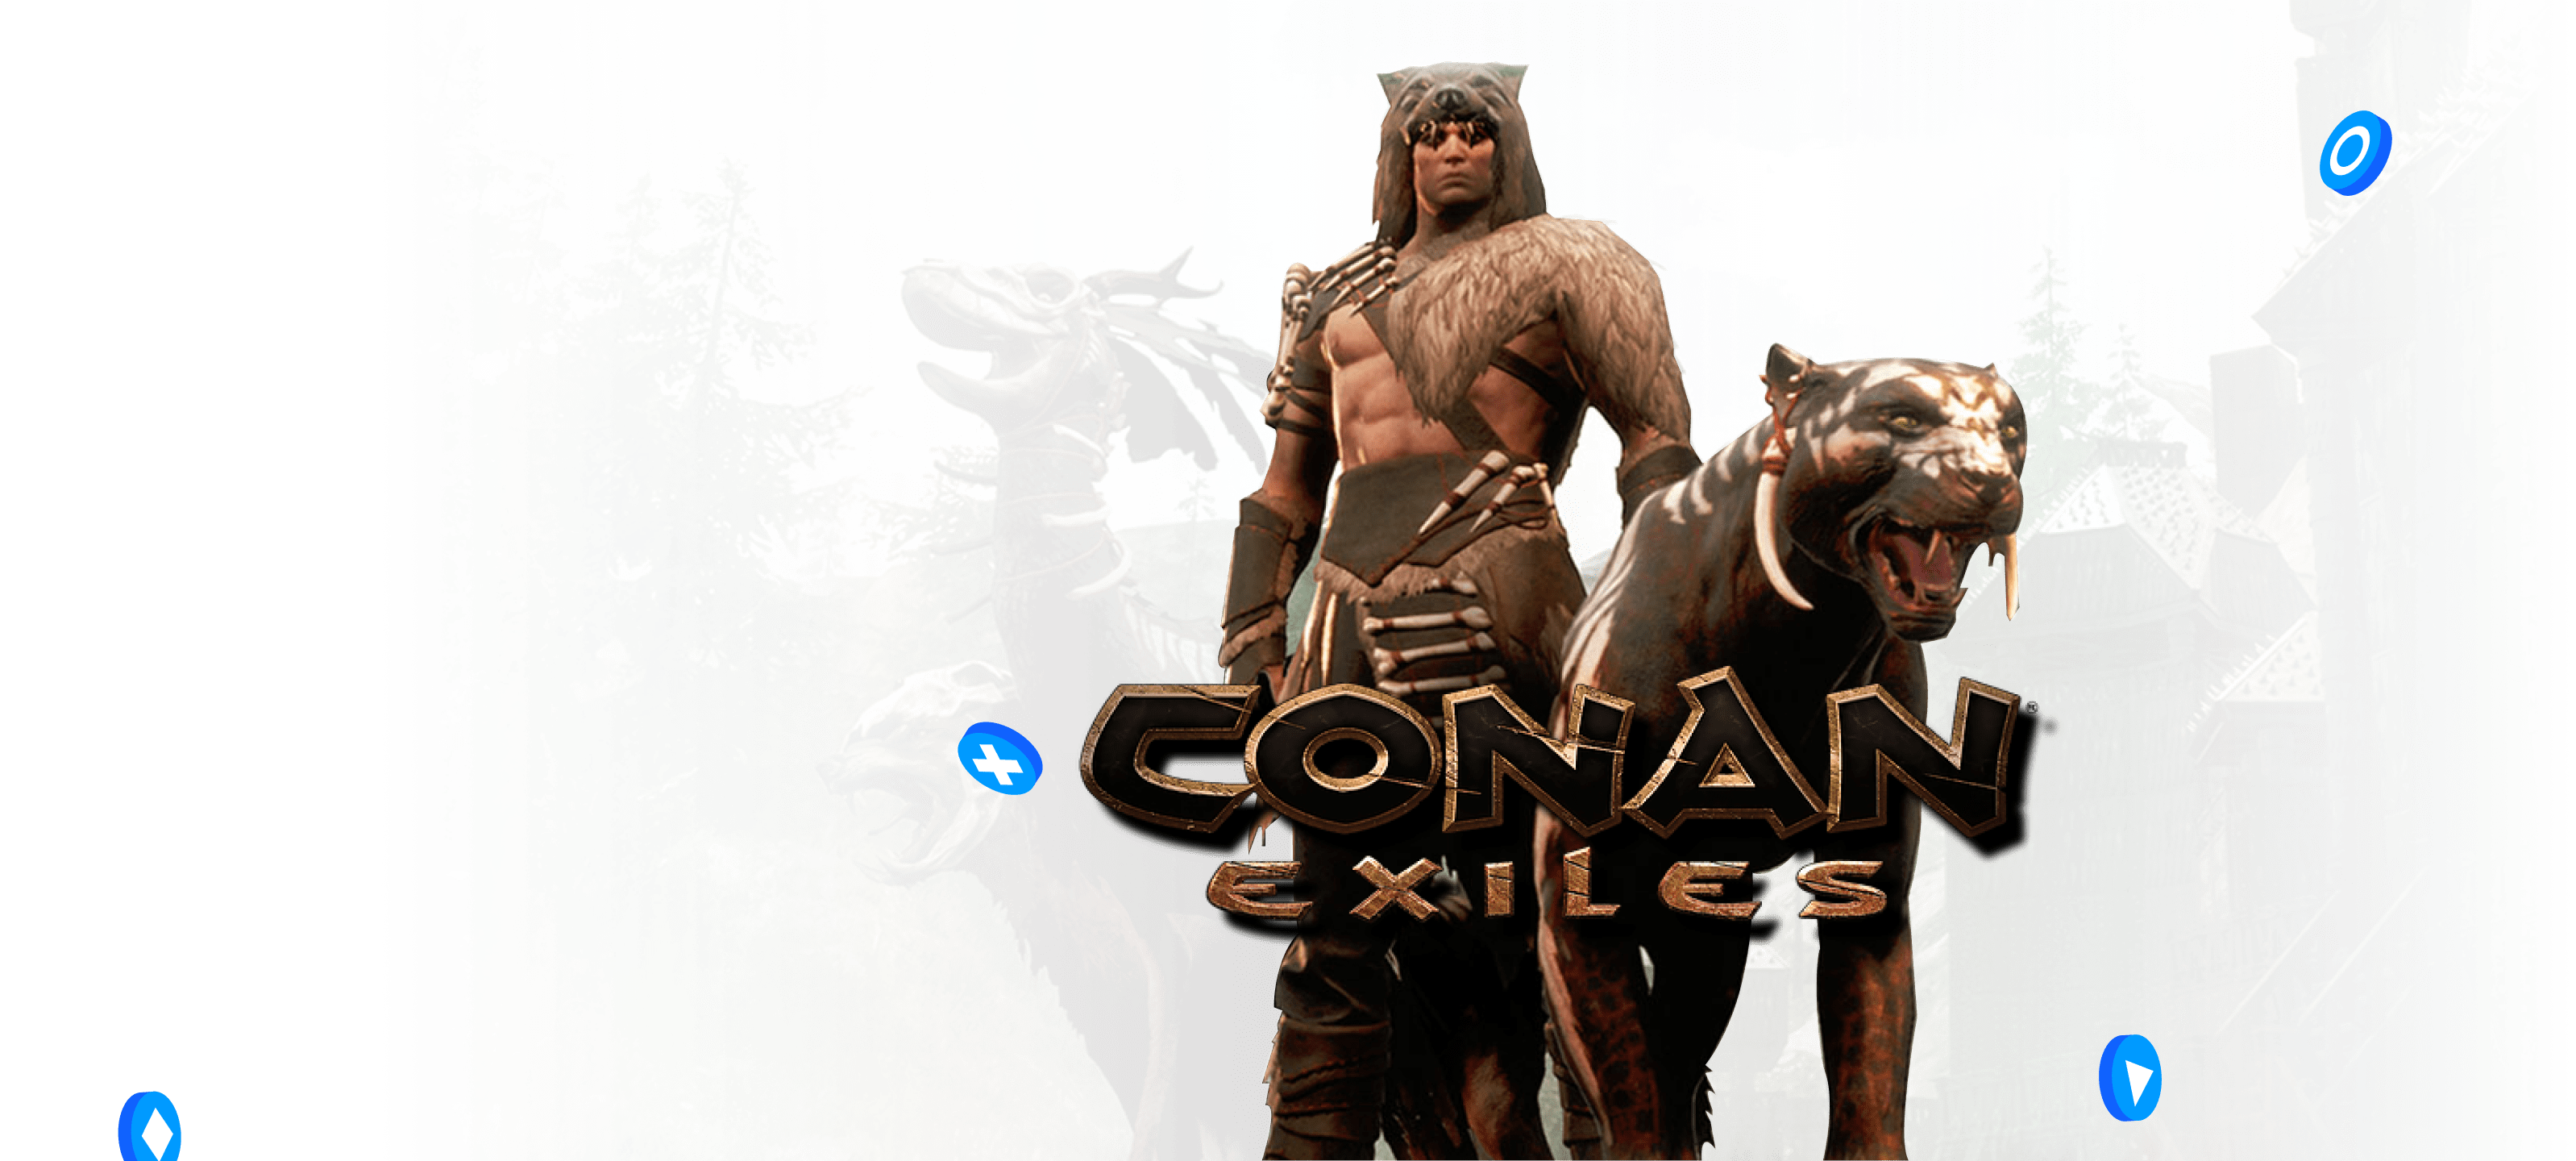 Premium Conan Exiles game server hosting